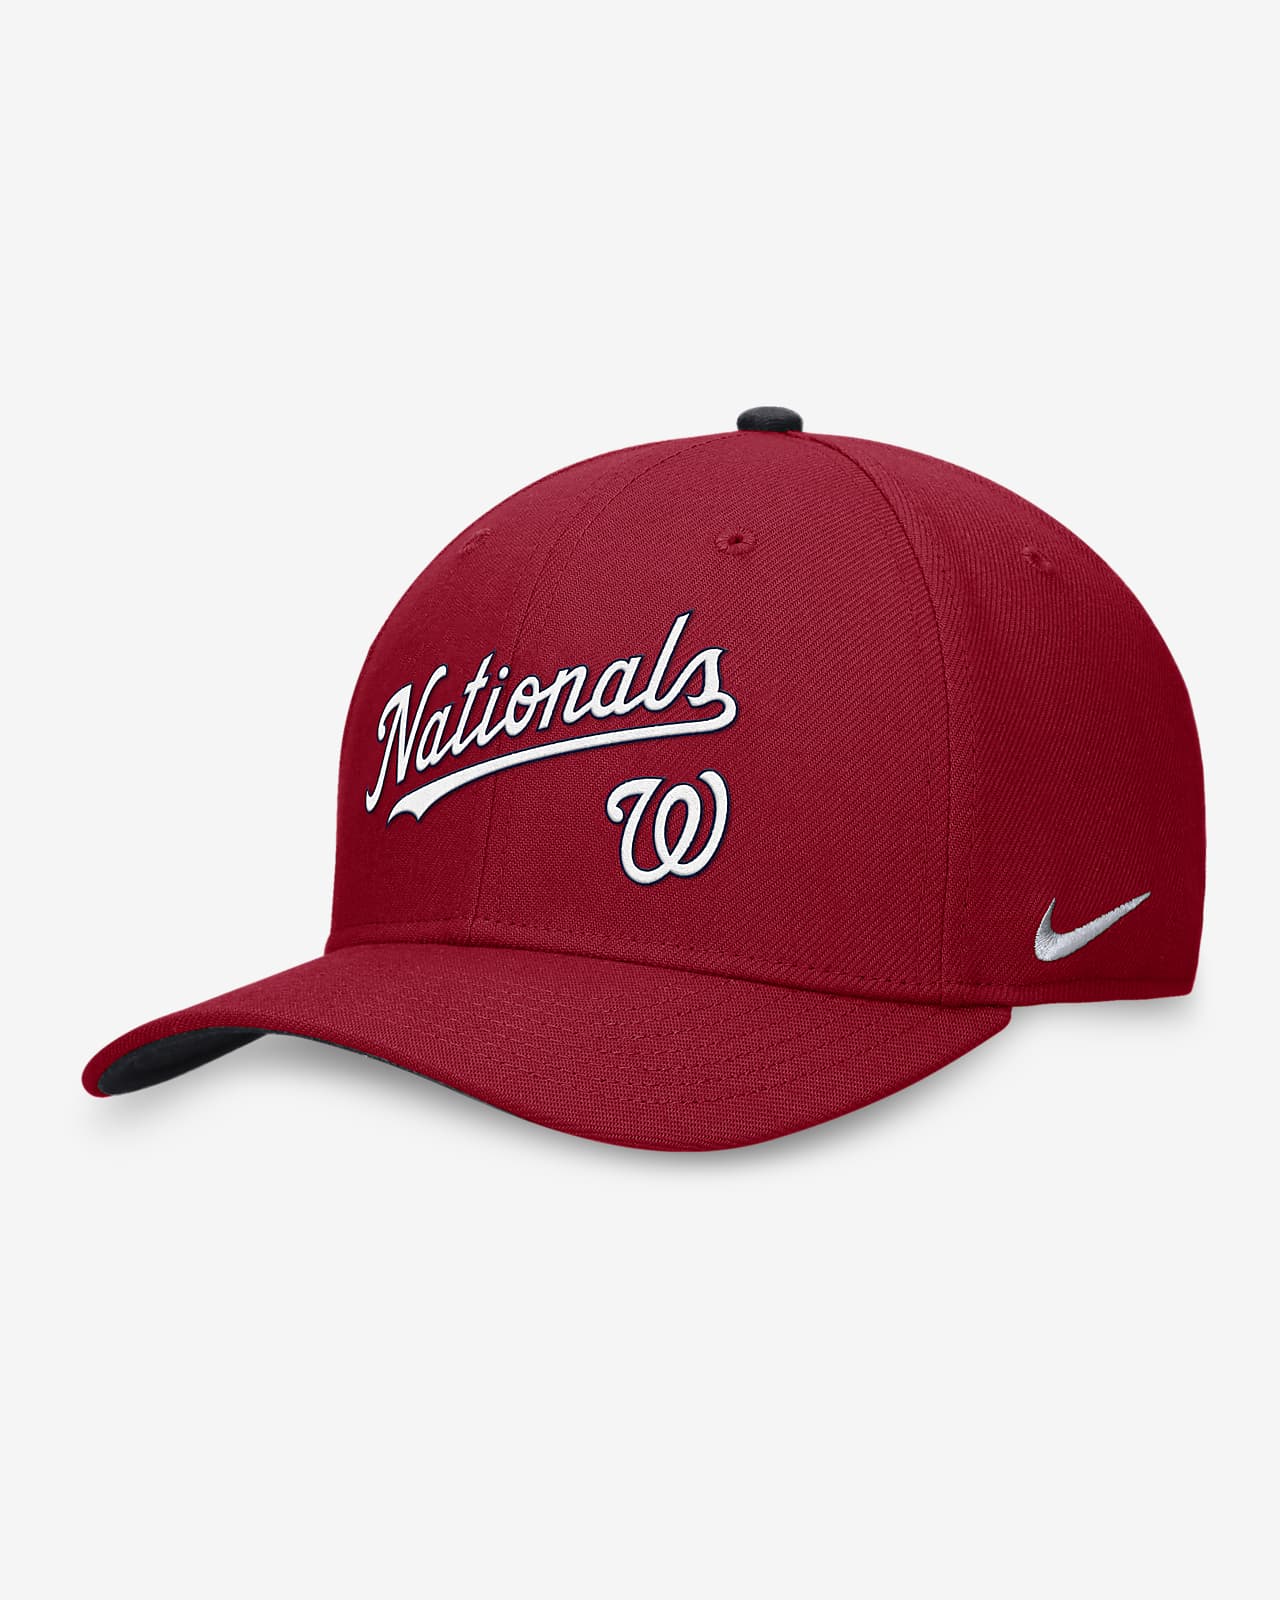 Washington Nationals Hats & Caps  Washington nationals, New era